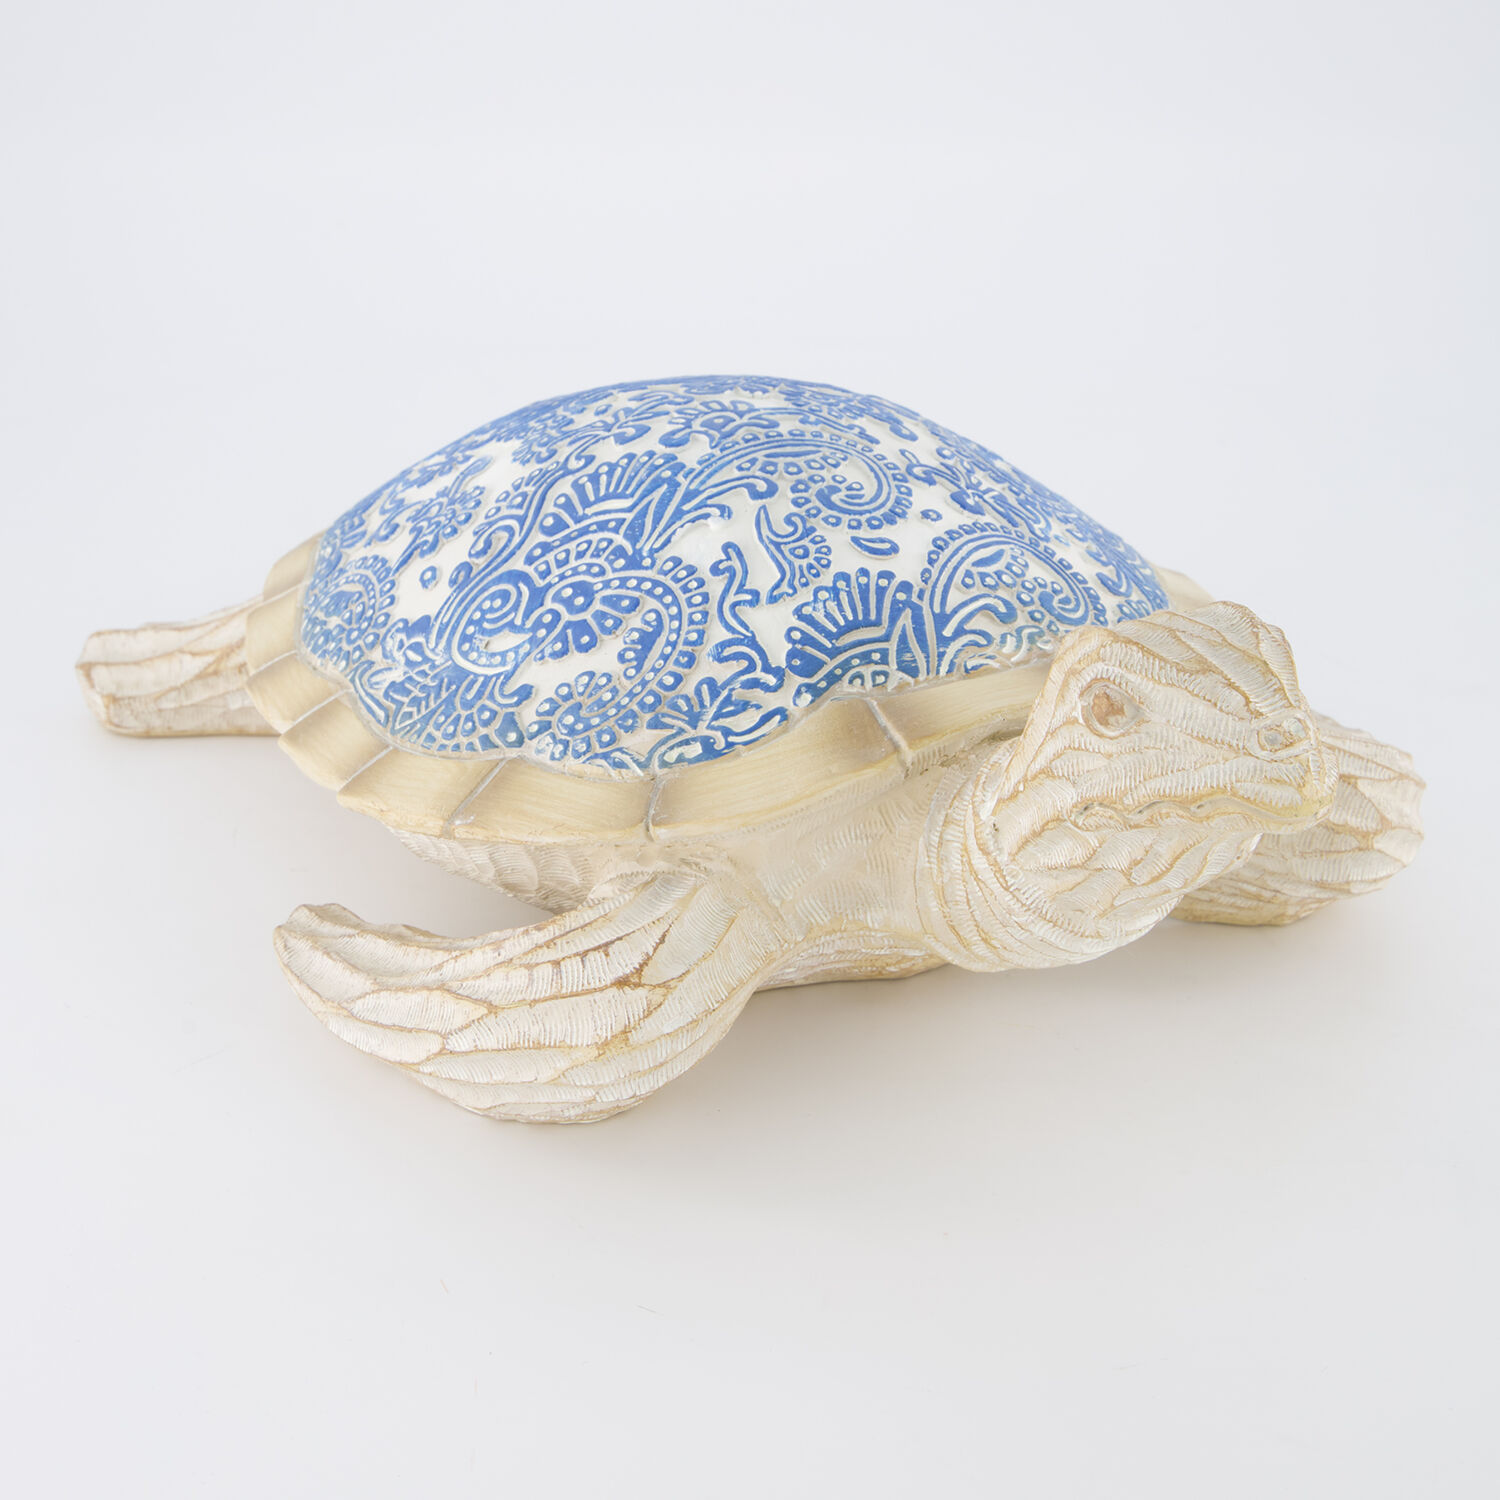 цена Декоративная фигурка сине-бежевого цвета в виде морской черепахи 12х37см Galt International